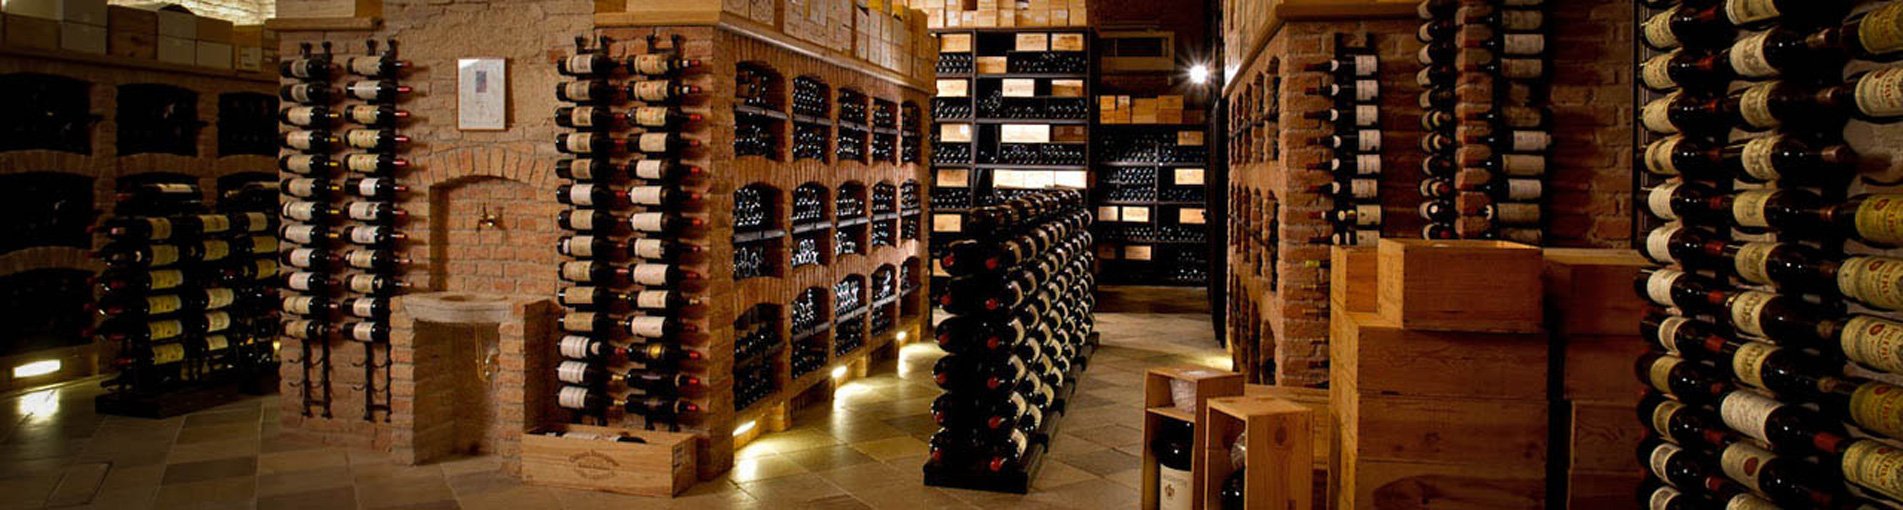 Скупка алкоголя wine-home-collection-2